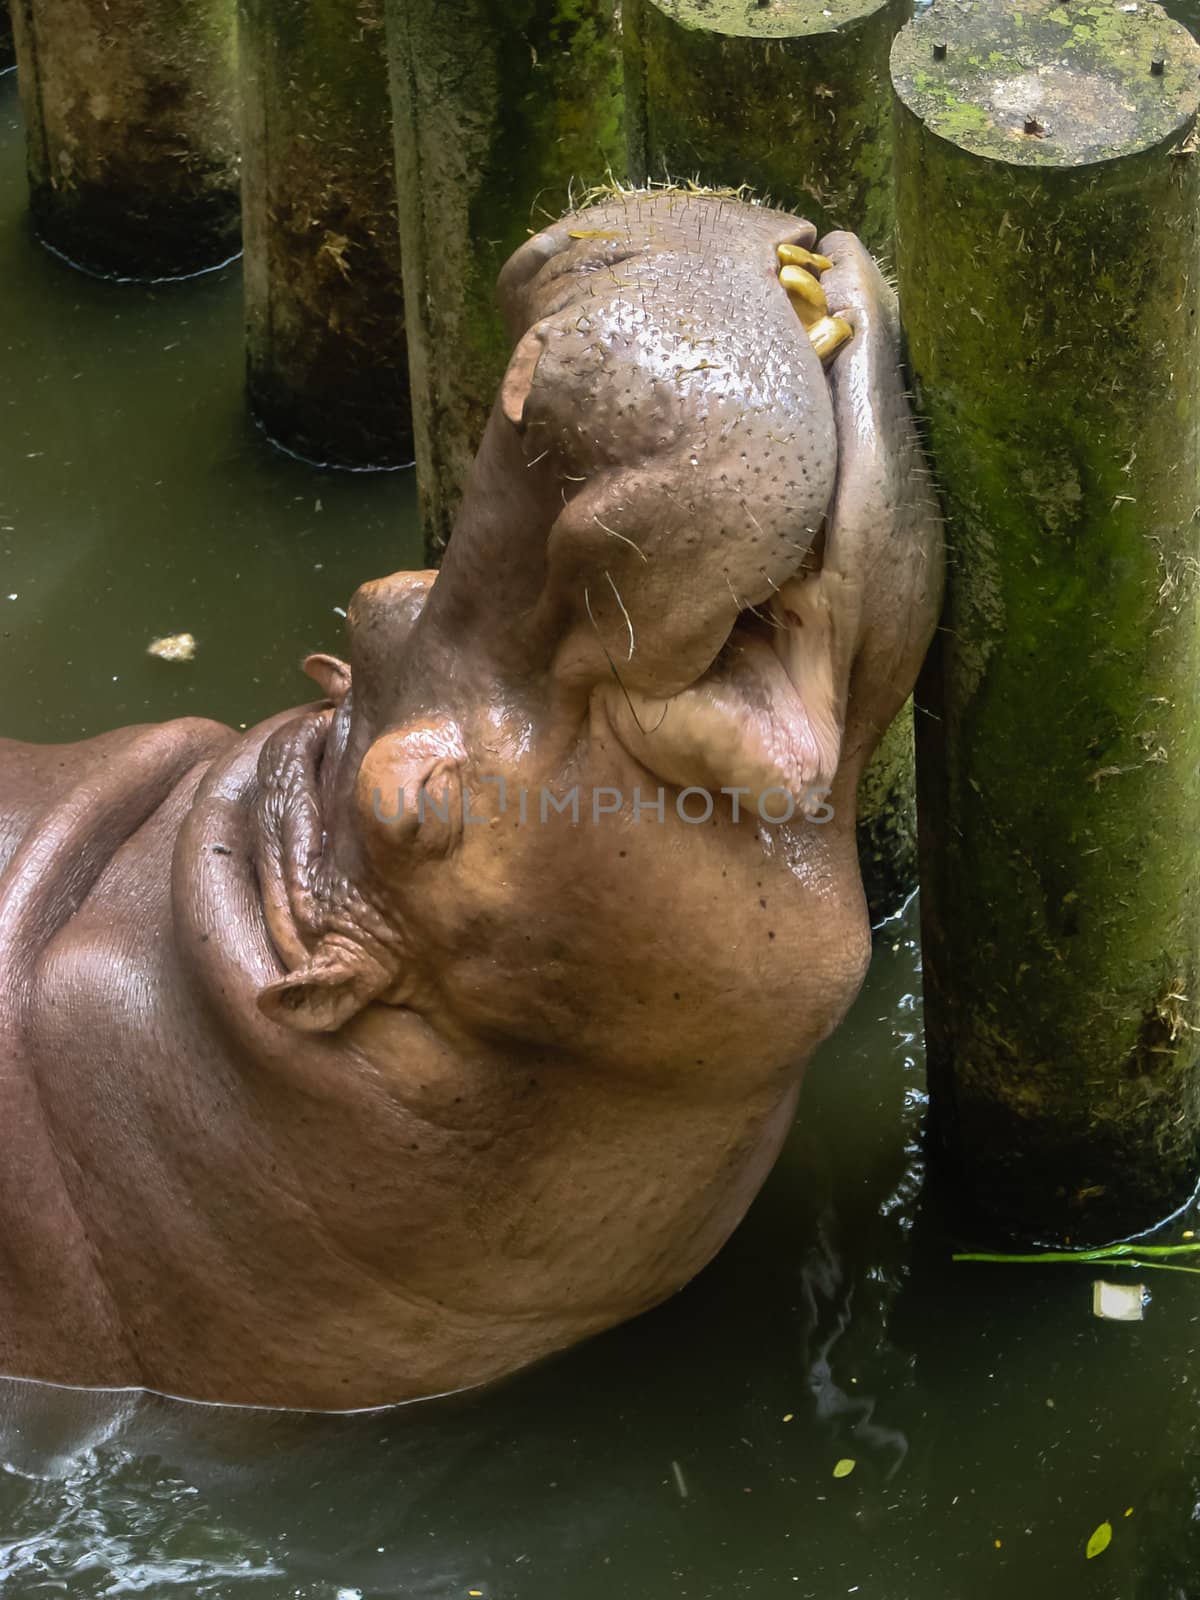 Sleepy Hippopotamus, Funny Shot by punpleng